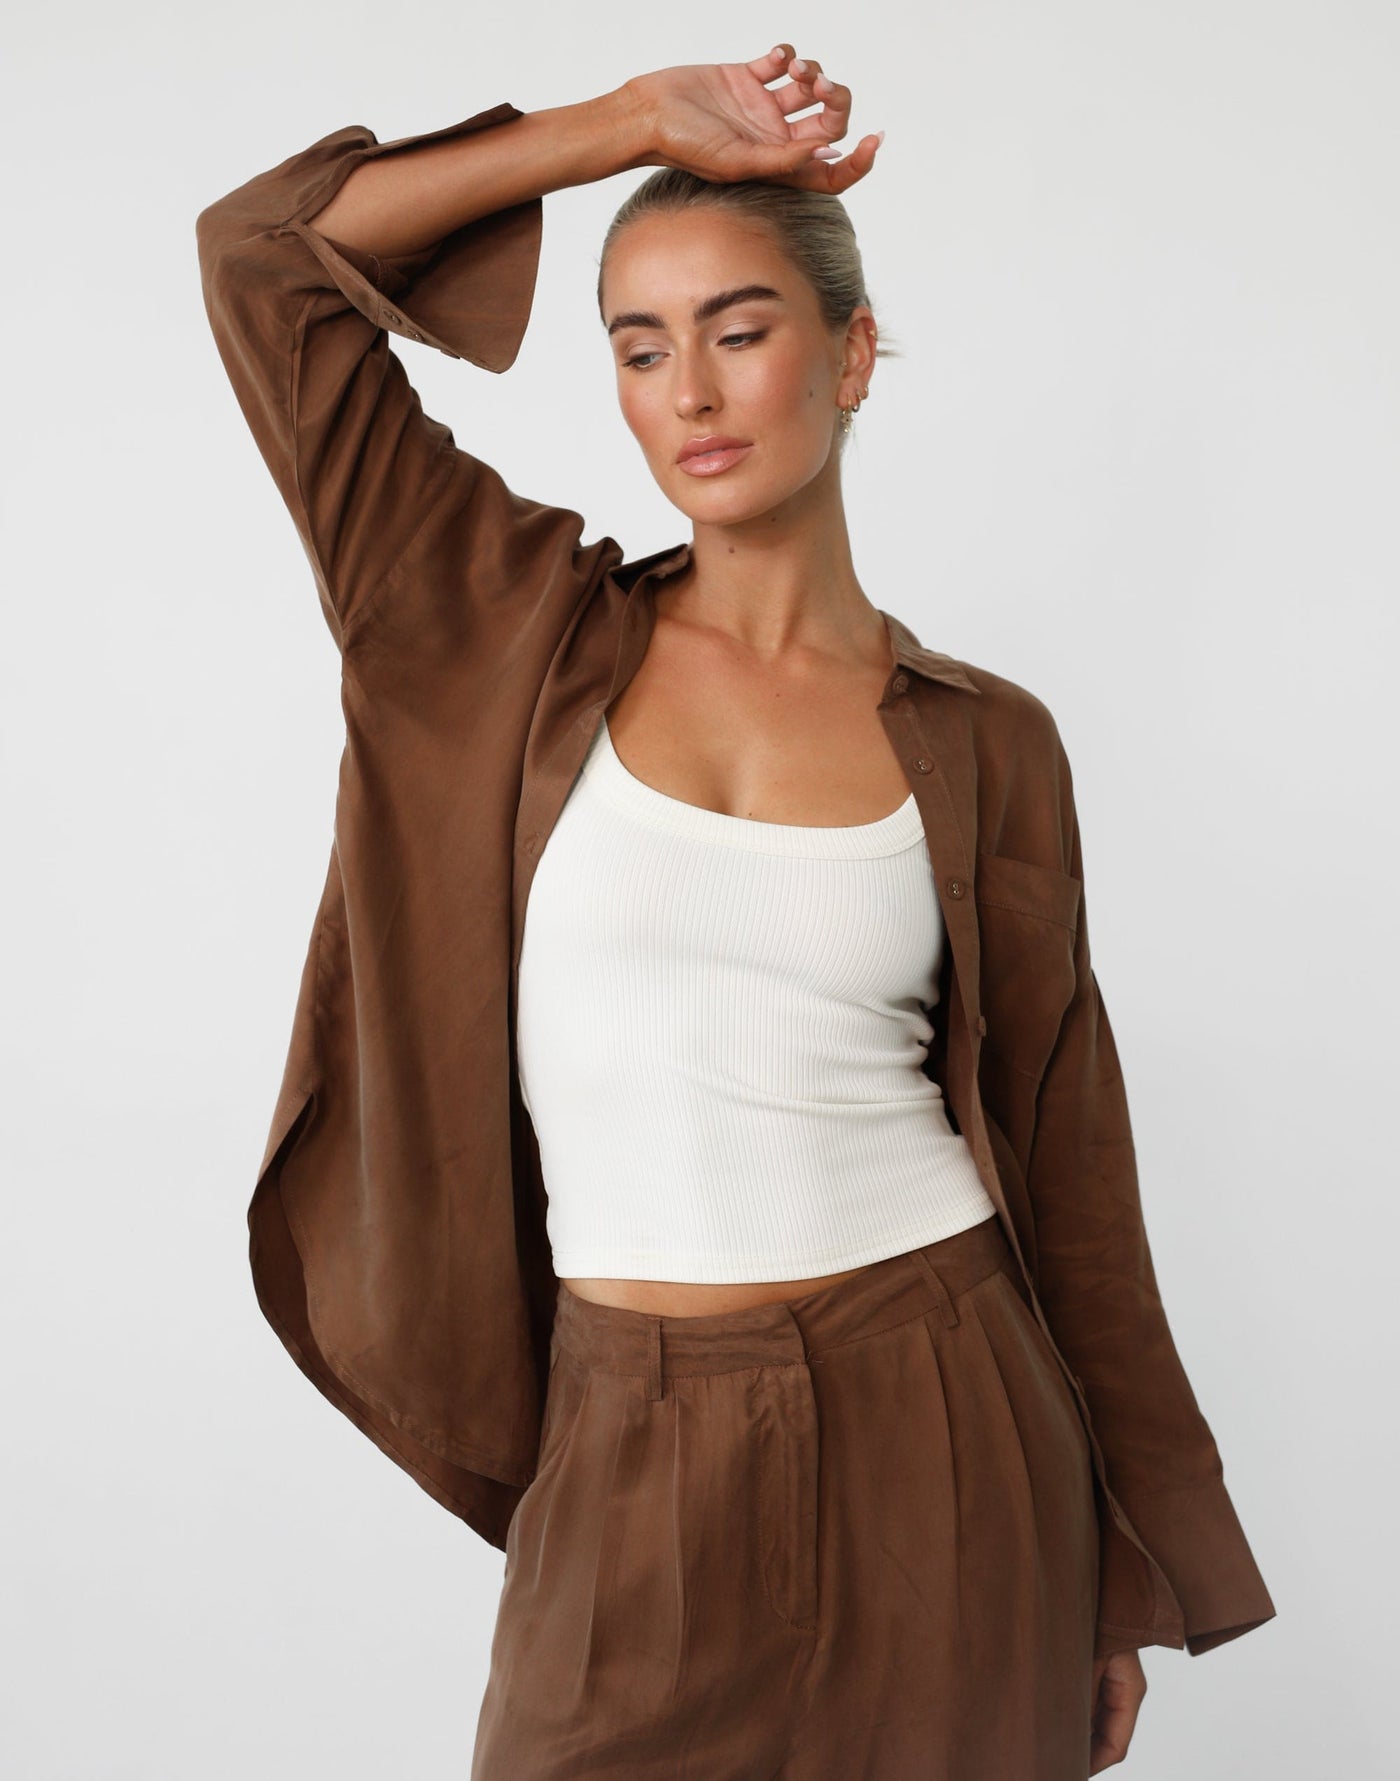 Ranna Long Sleeve Shirt (Mocha) - Button Up Relaxed Fit Shirt - Women's Top - Charcoal Clothing